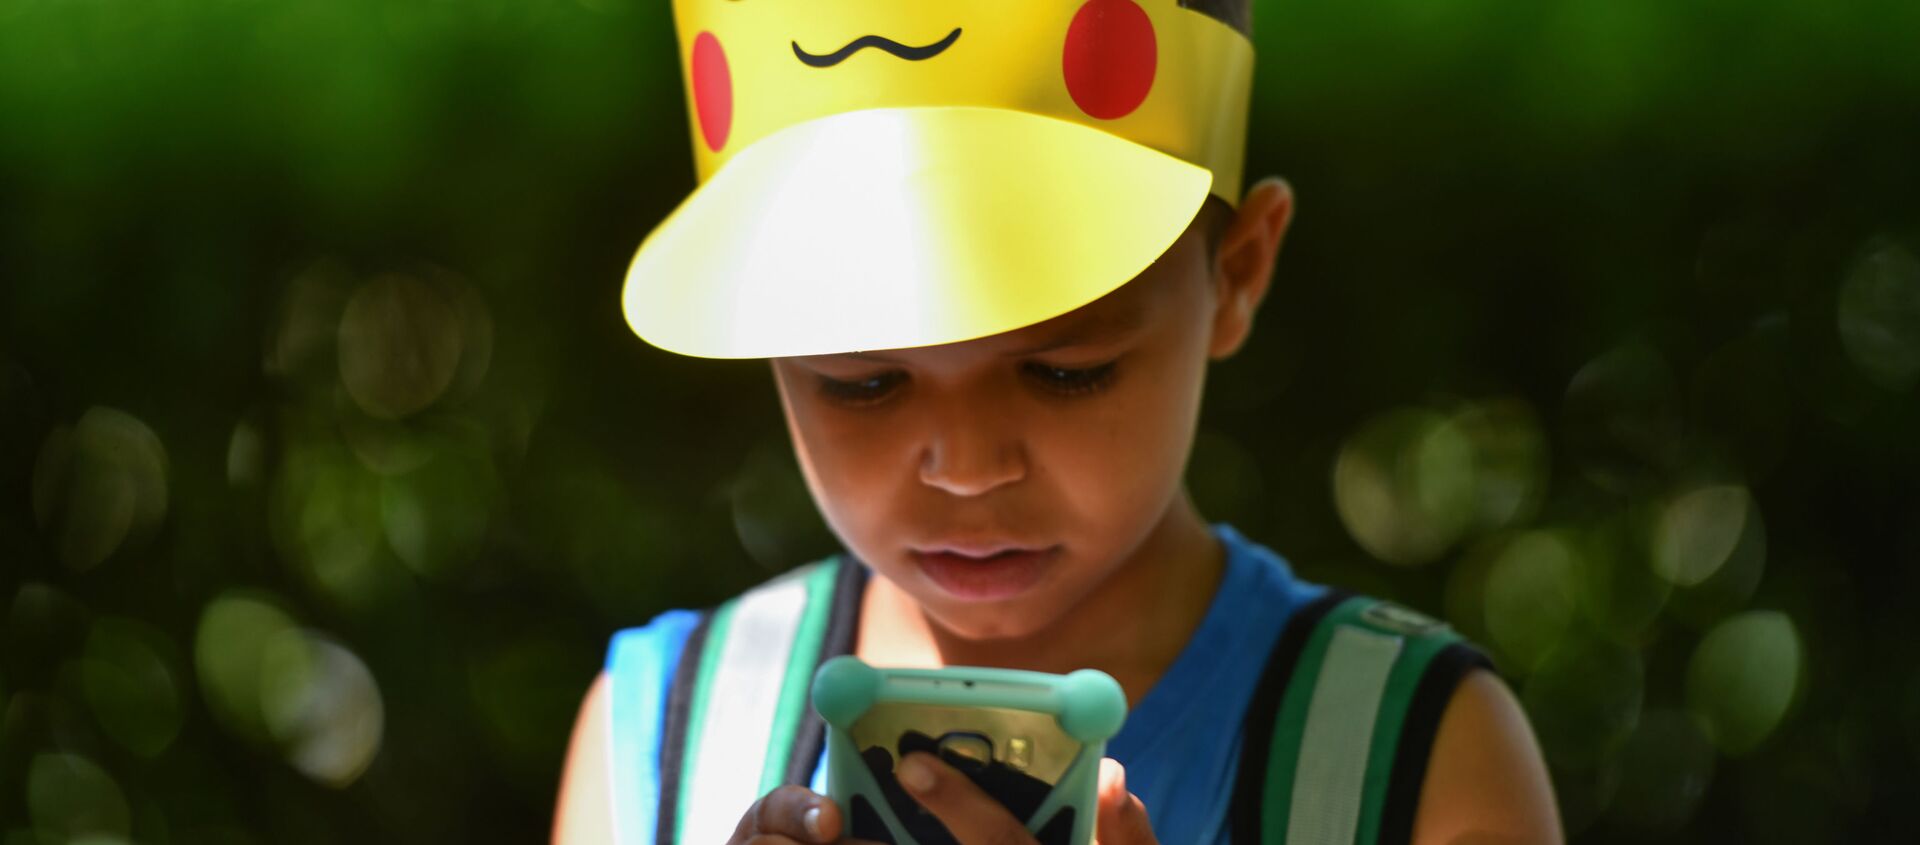 Un niño jugando a Pokémon Go - Sputnik Mundo, 1920, 05.09.2020